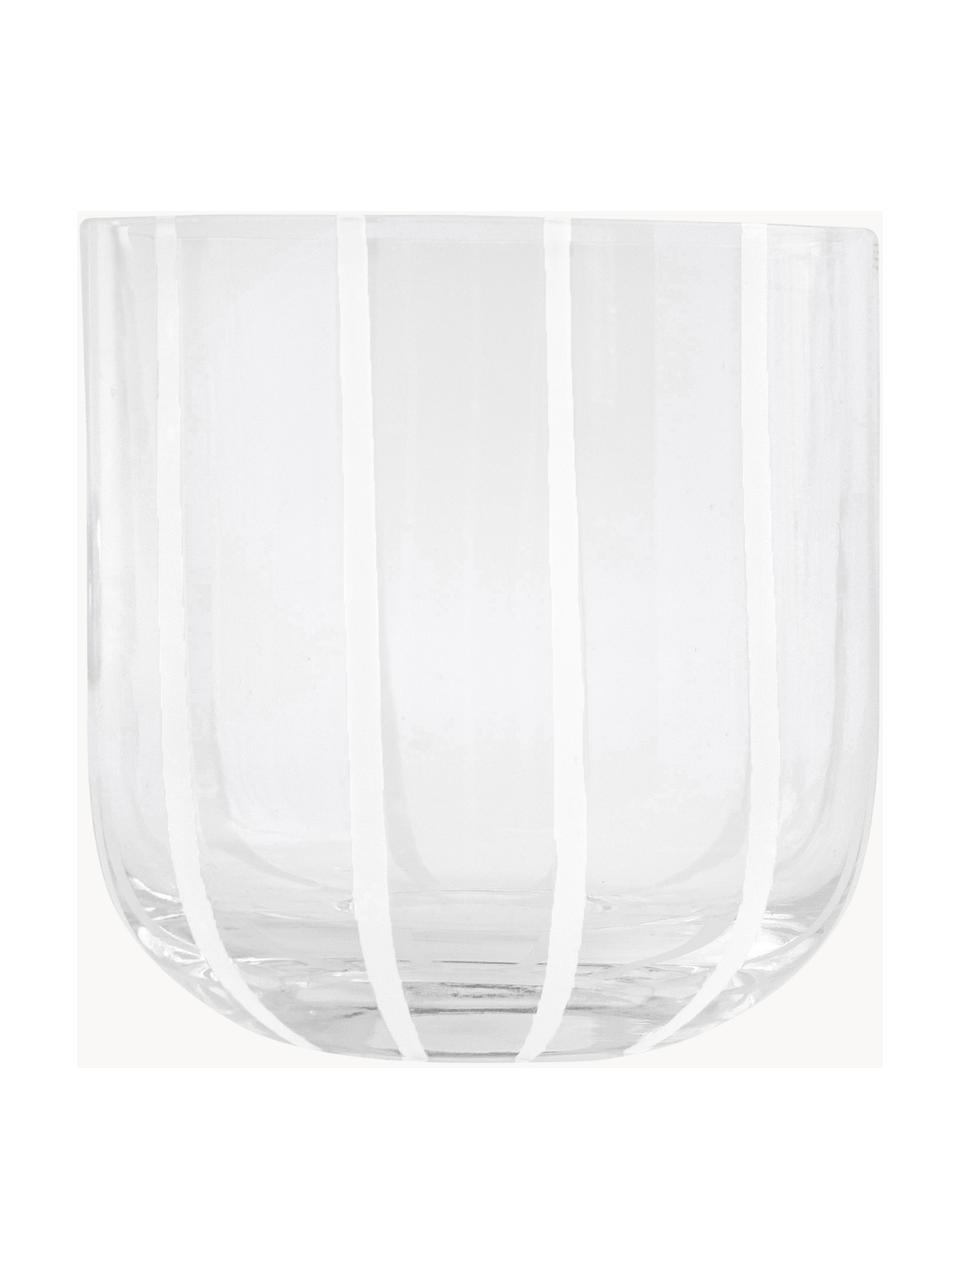 Ručně foukané sklenice Mizu, 2 ks, Sklo, Transparentní, bílá, Ø 8 cm, V 8 cm, 320 ml